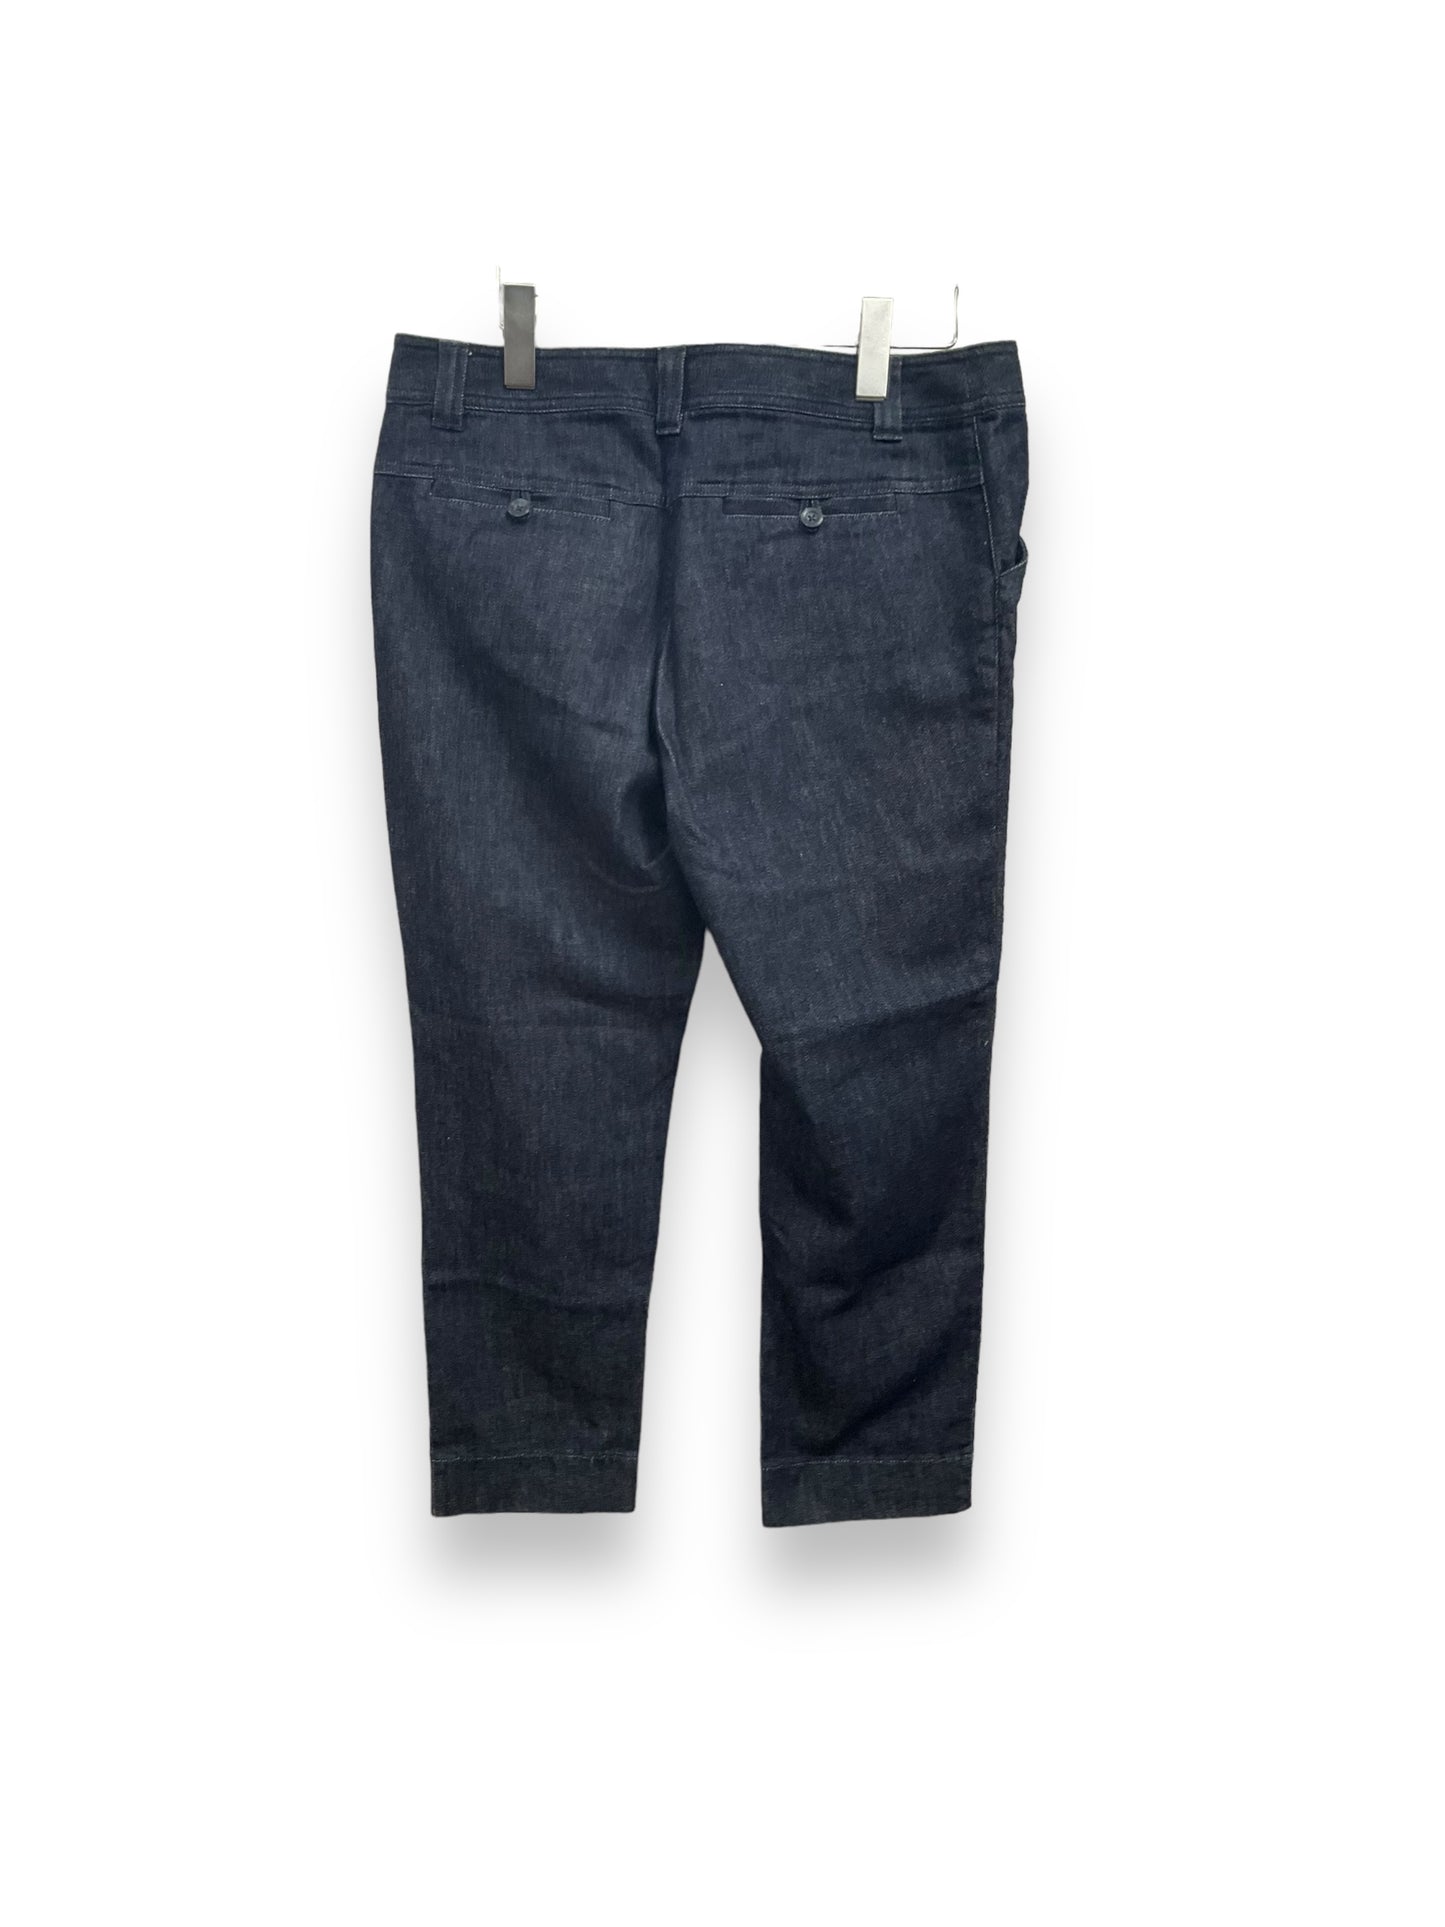 Jeans Cropped By J. Jill  Size: 10petite